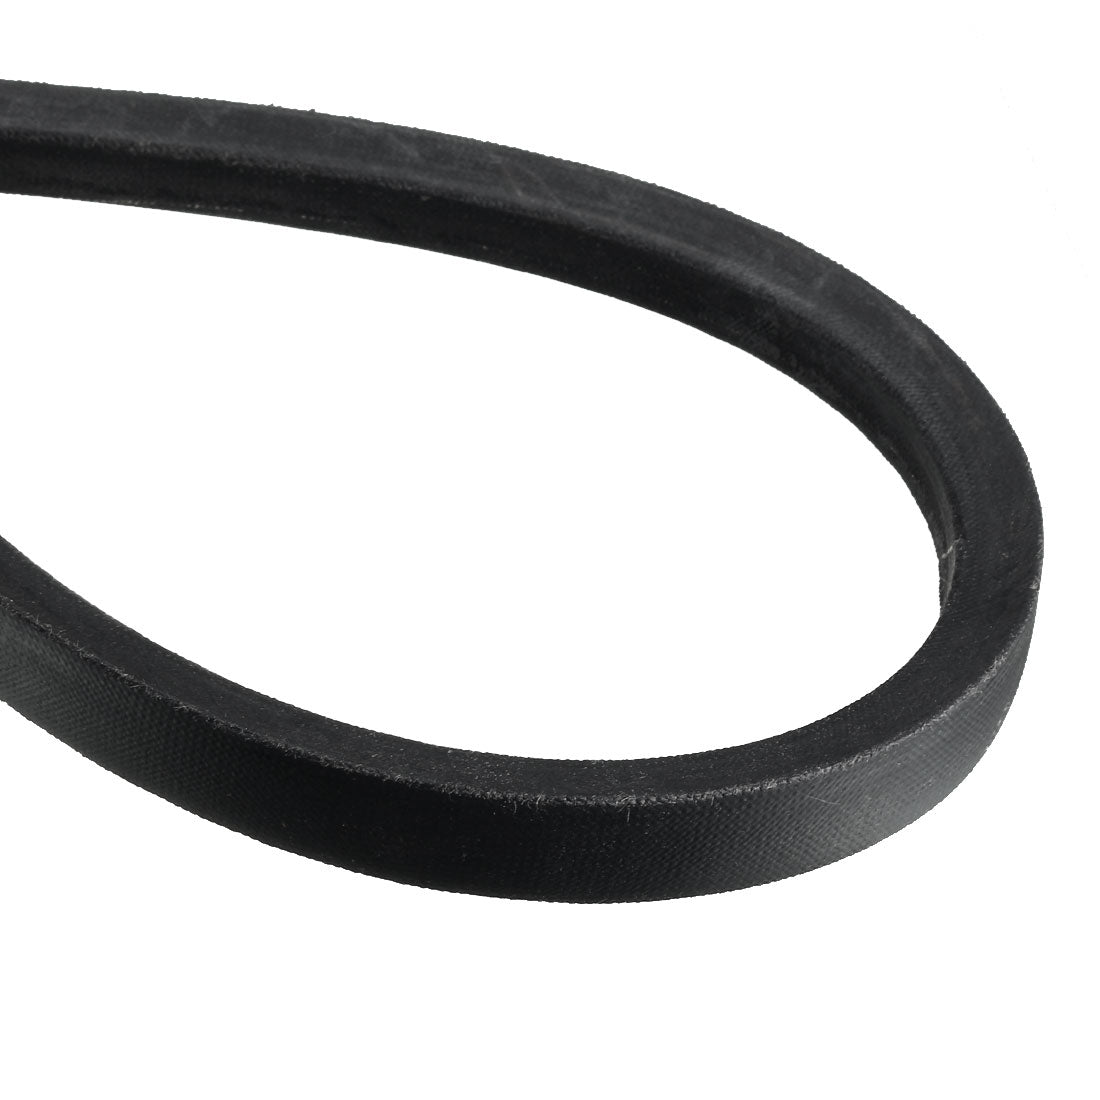 uxcell Uxcell B39 V-Belts 39" Pitch Length, B-Section Rubber Drive Belt 2pcs